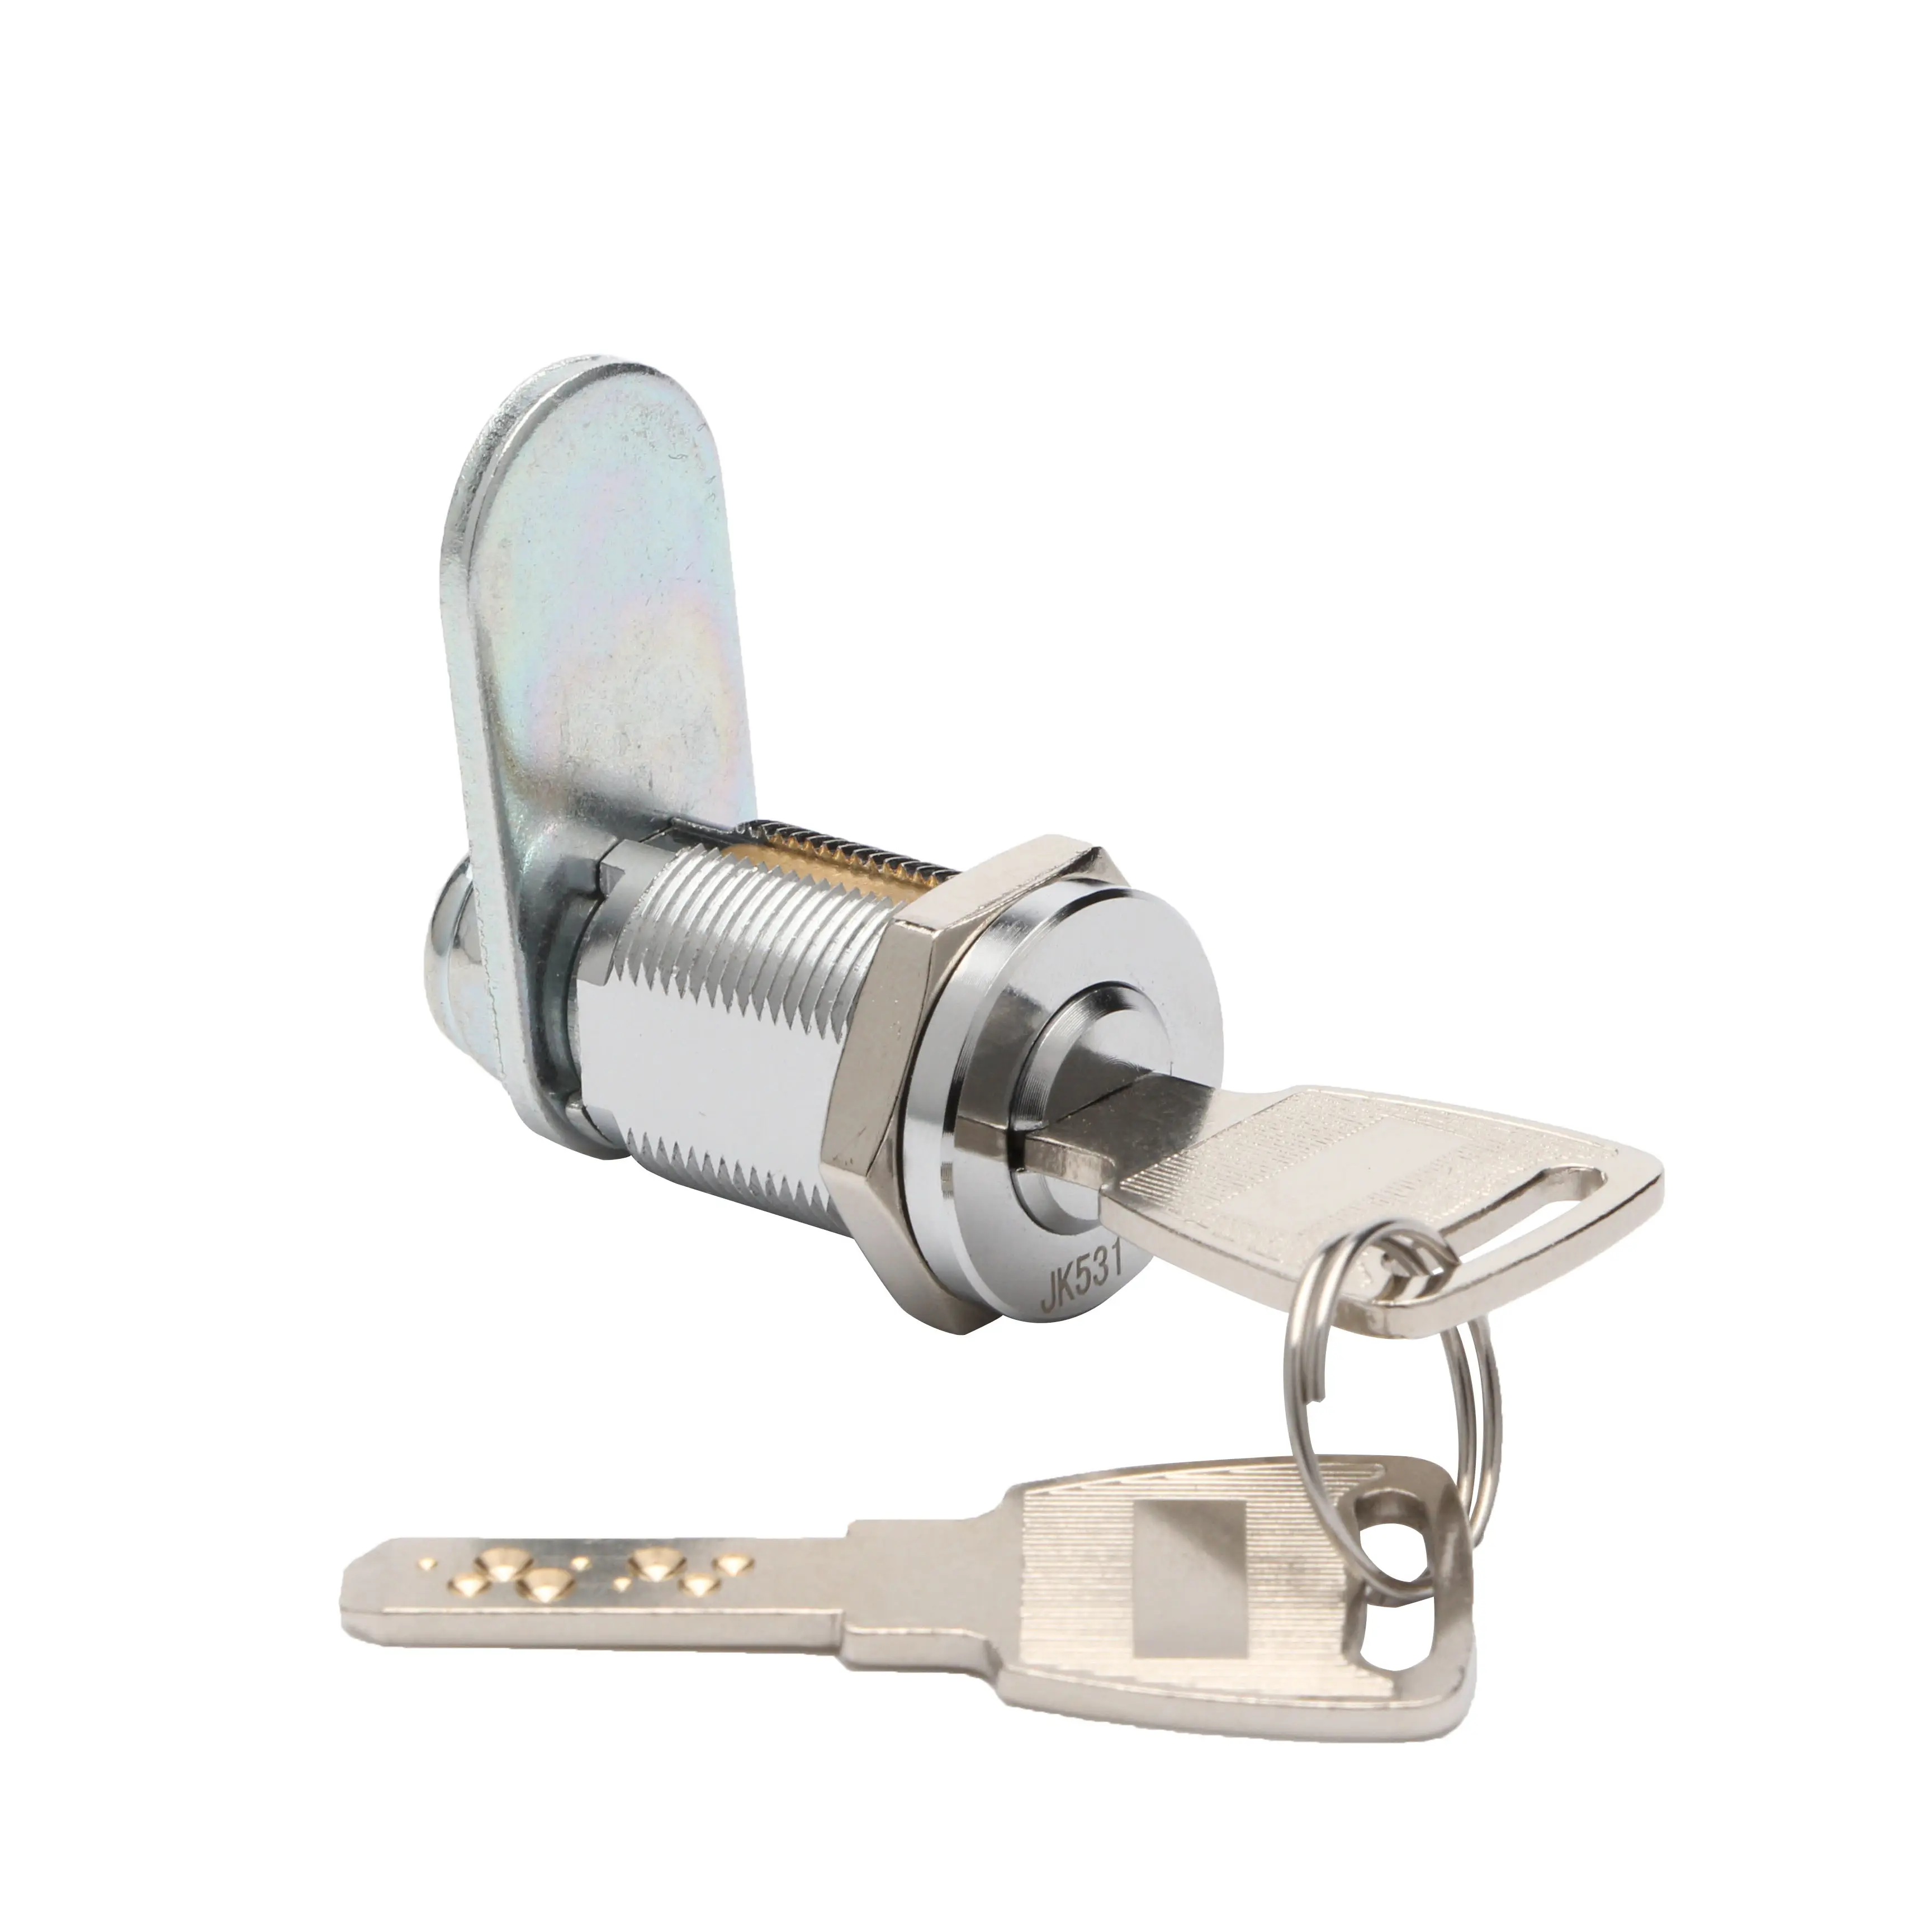 Hight security JK531 door cylinder cabinet dimple key cam lock for vending machine